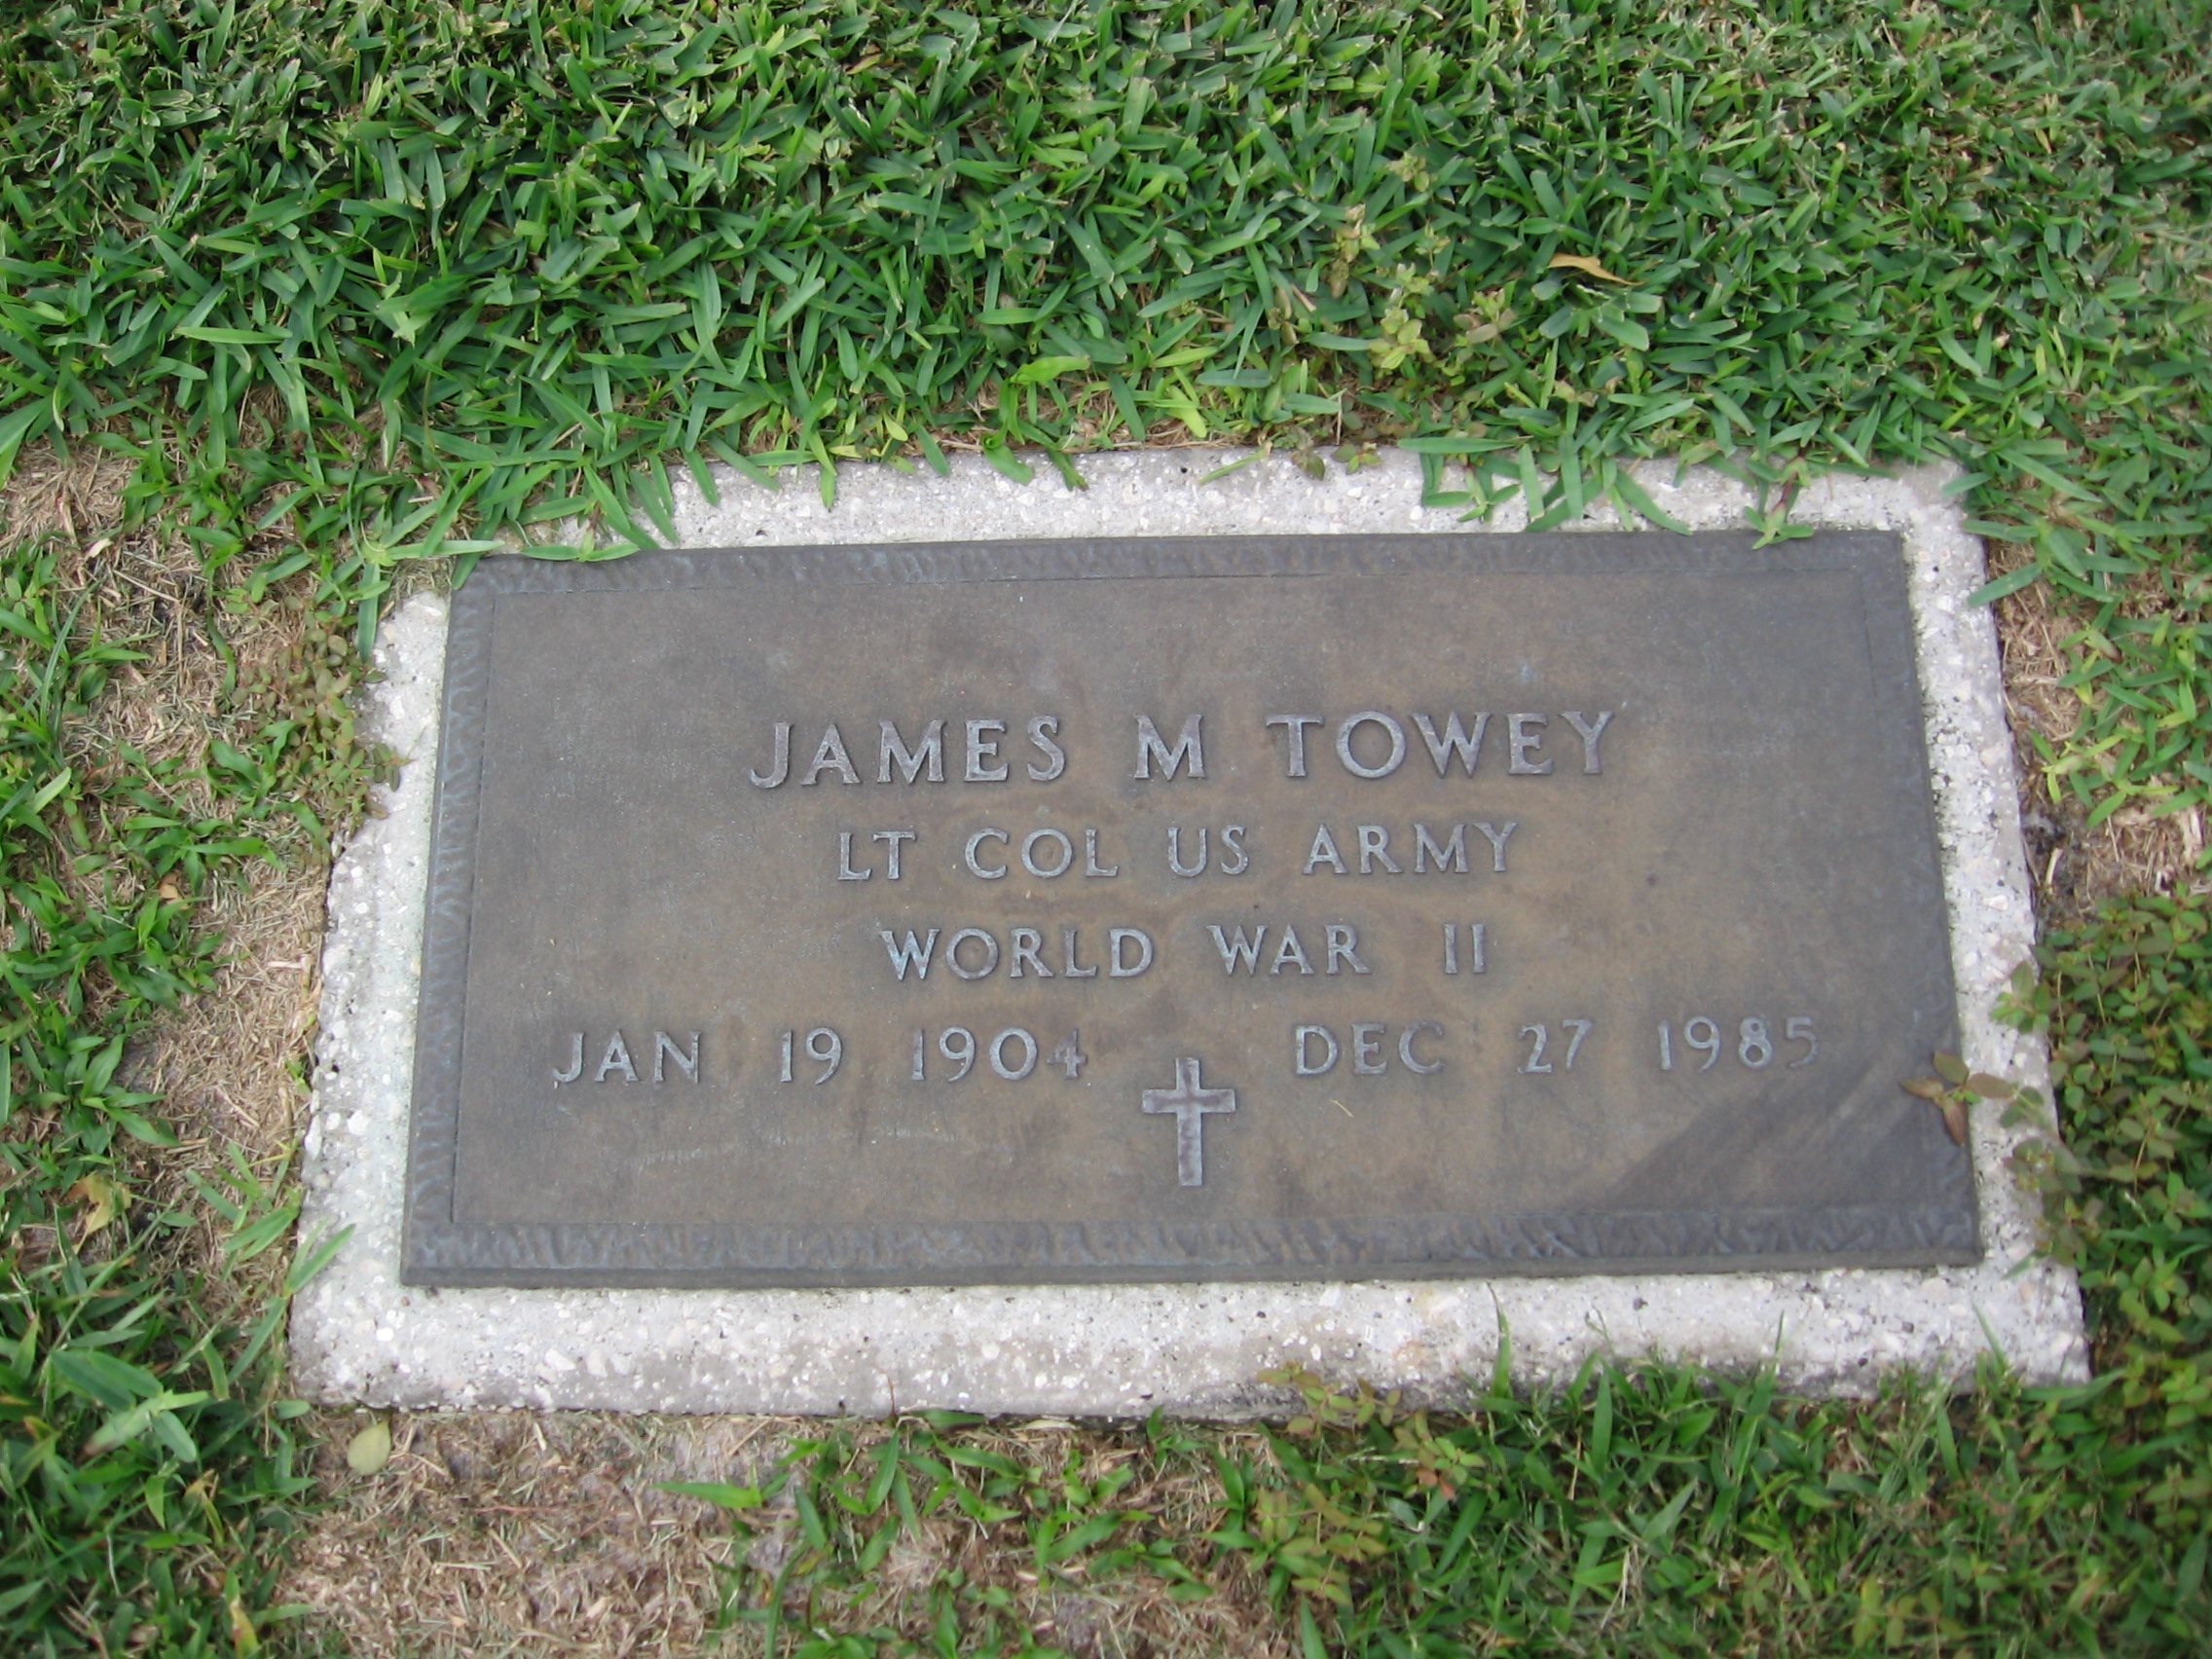 LTC James M Towey